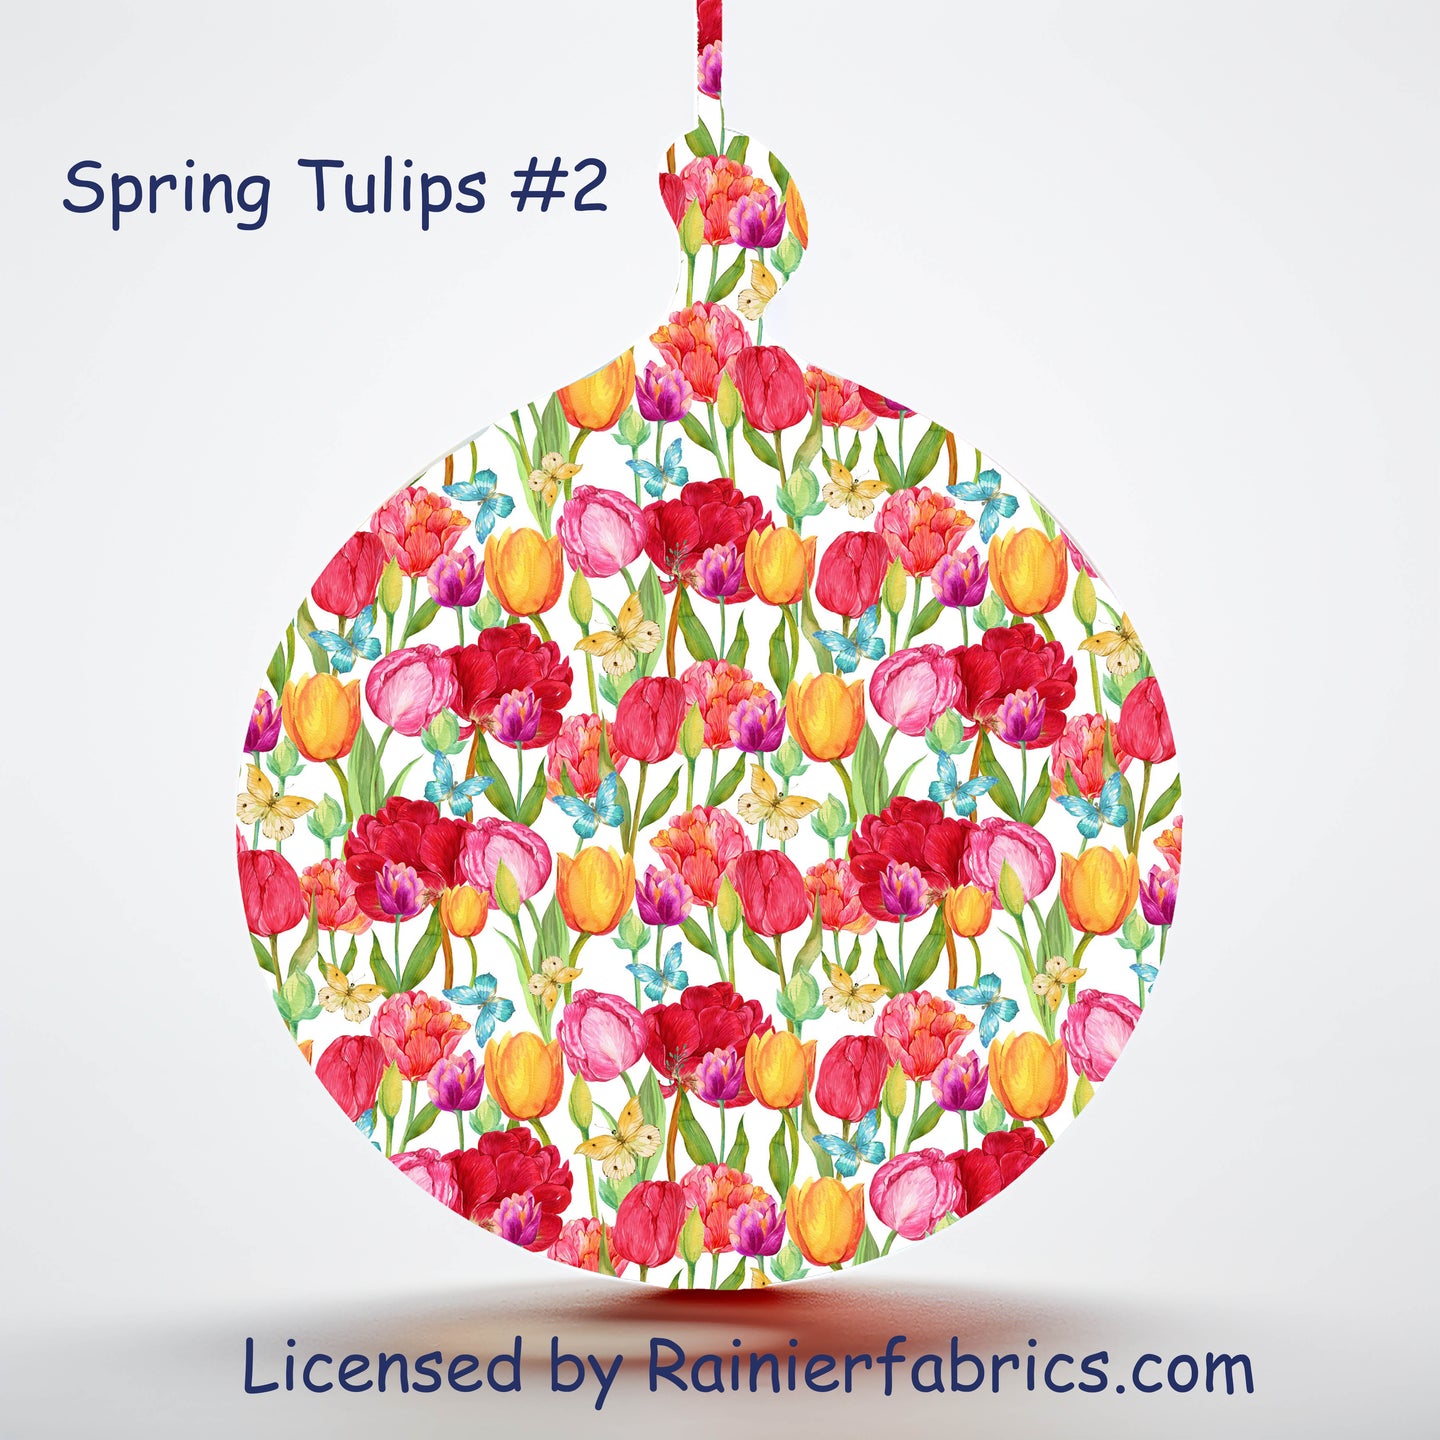 Spring Tulips #2